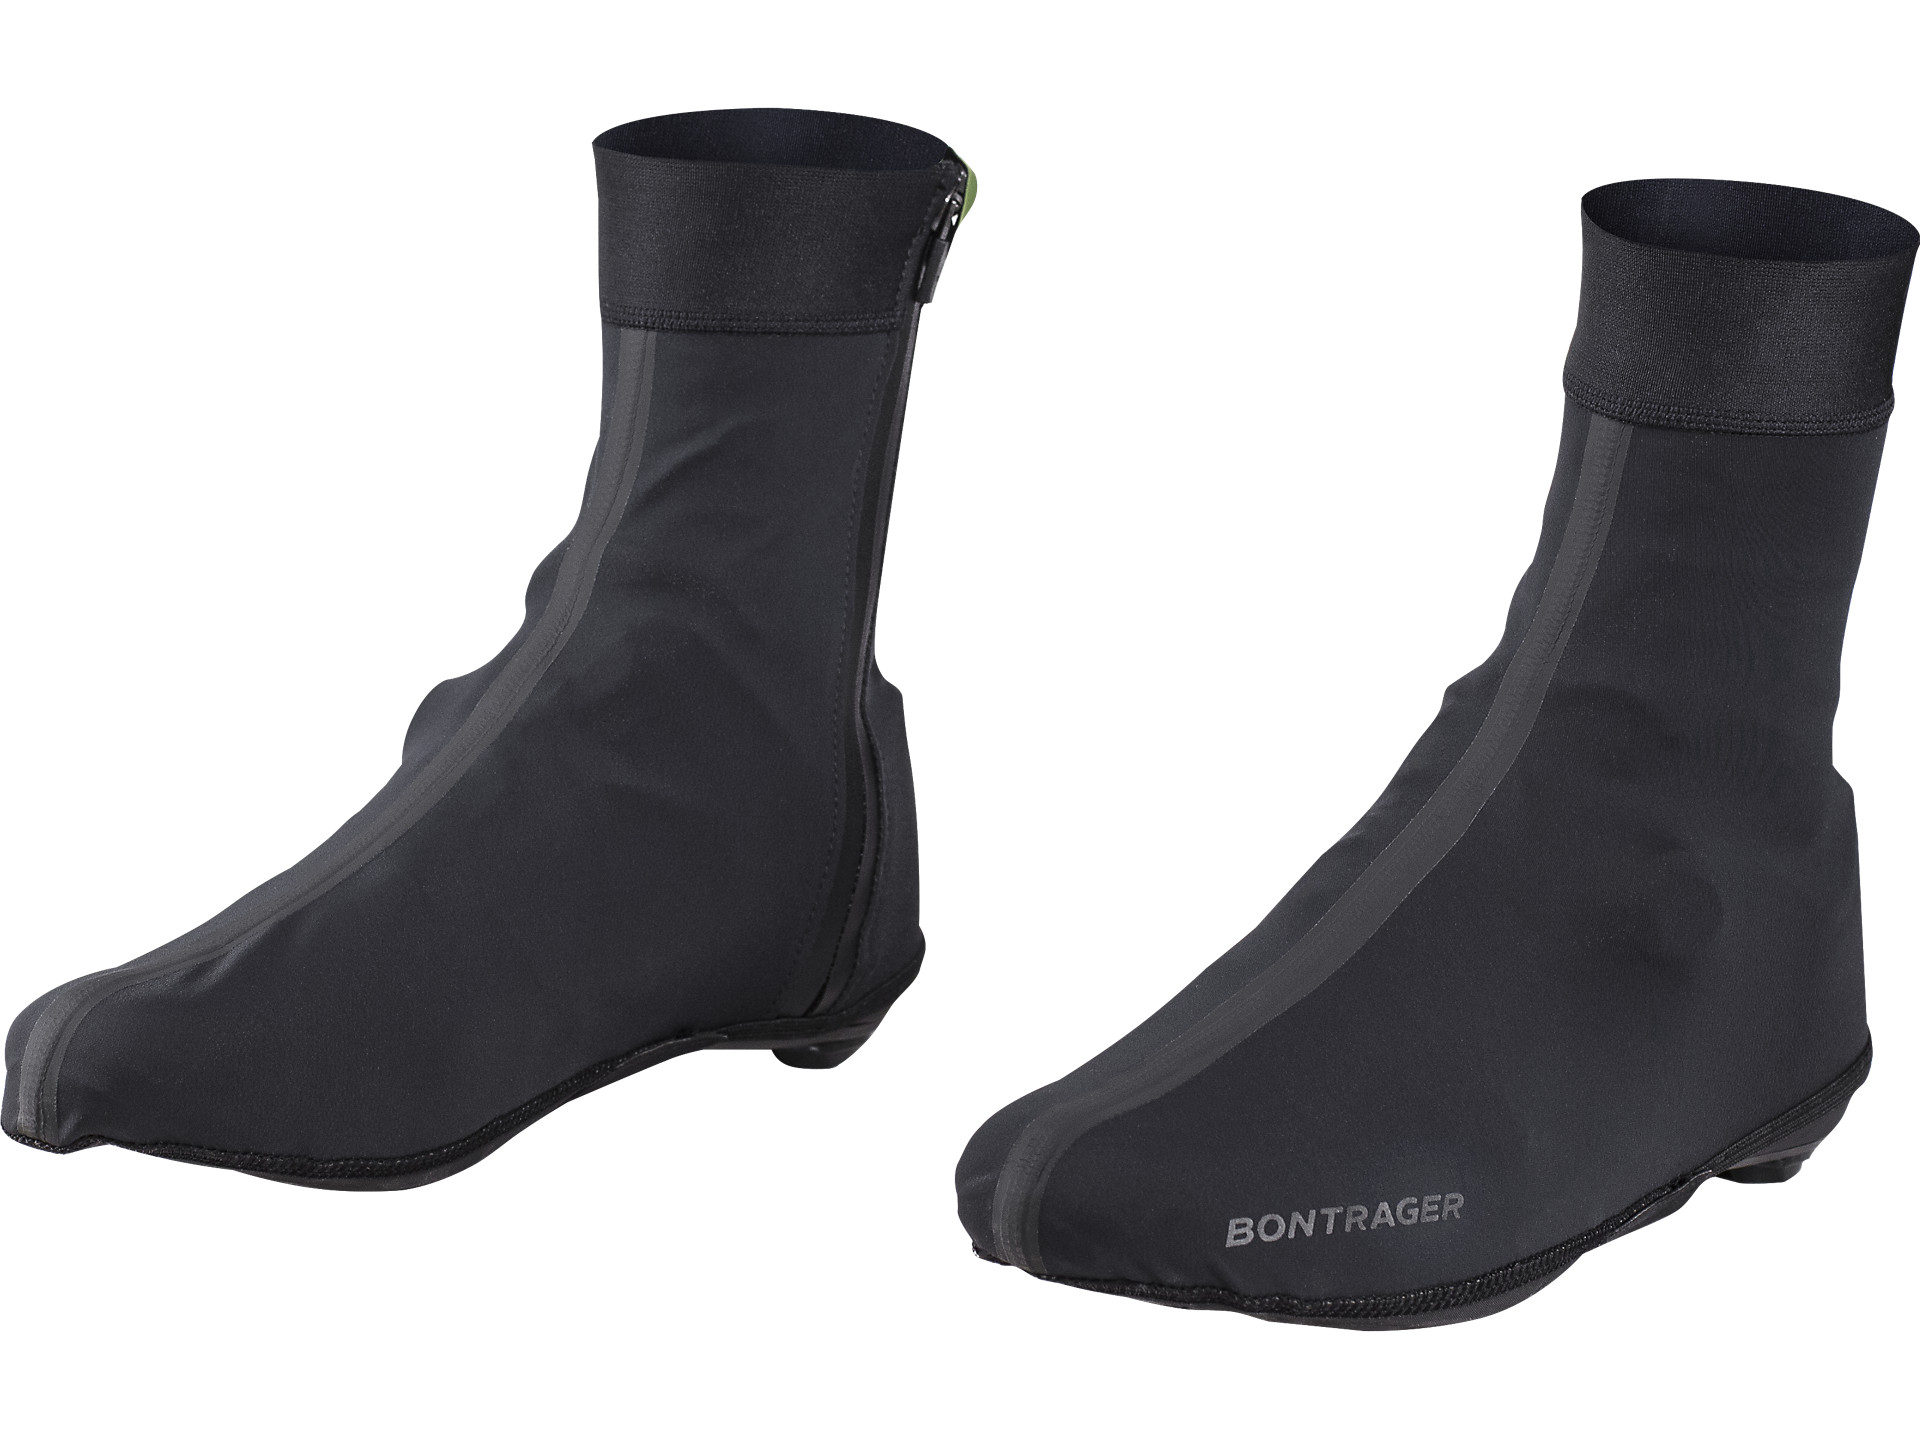 Rain Boot Covers for Motorcycle Black Reflective Nylon Waterproof Shoe Guard 